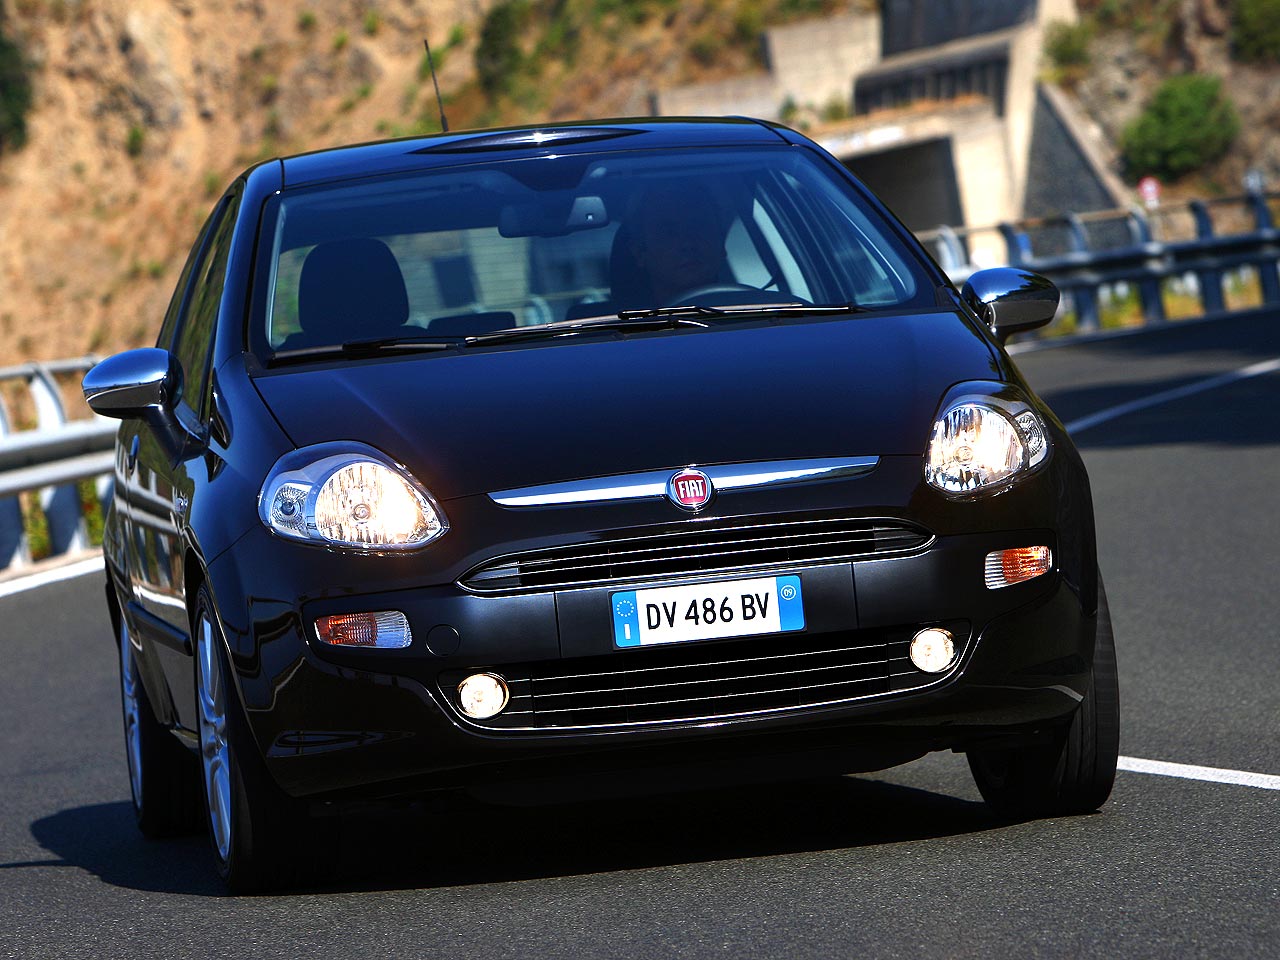 Fiat Punto Evo 1 4 16v Multiair Im Fahrbericht Autozeitung De